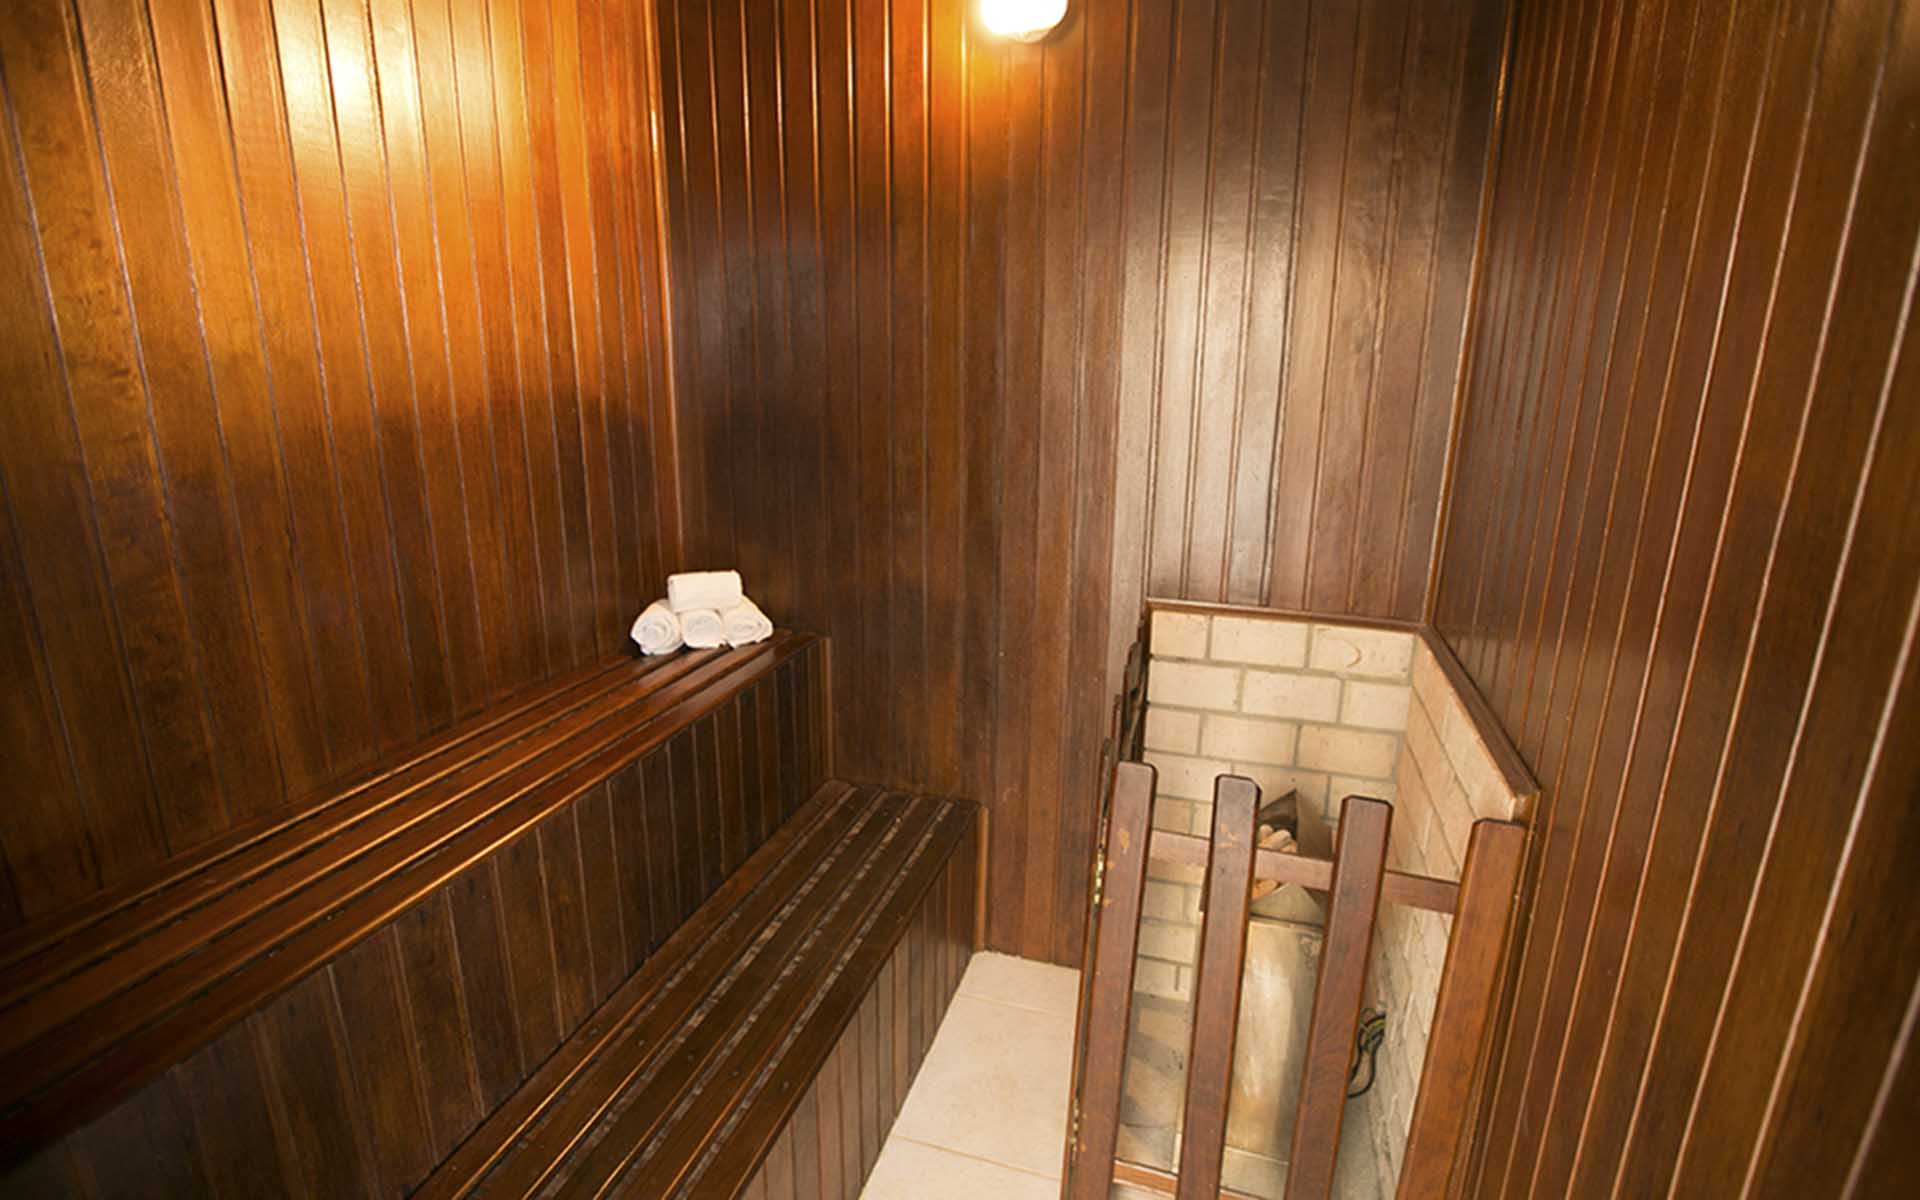 sauna do apart hotel flat em brasilia biarritz hplus long stay